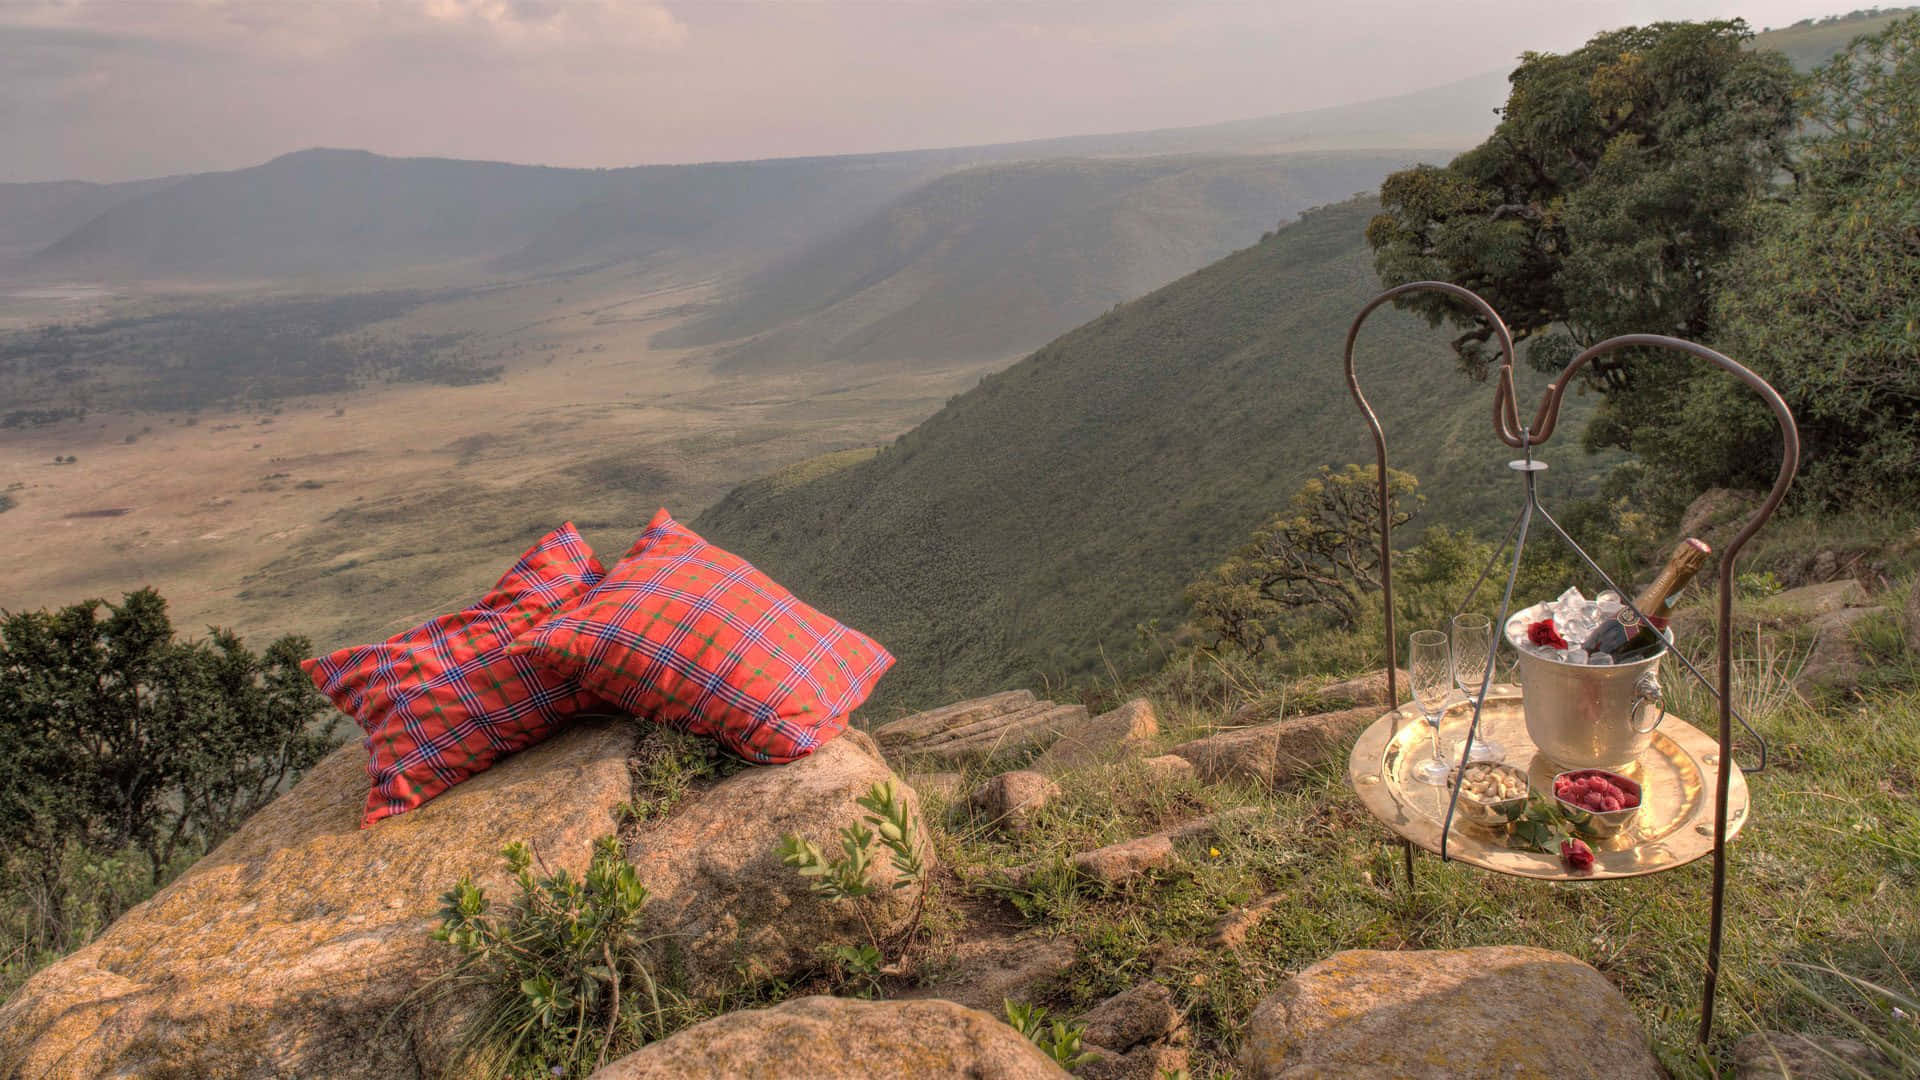 Scenery At The Northern Tanzania Ngorongoro Crater Wallpaper